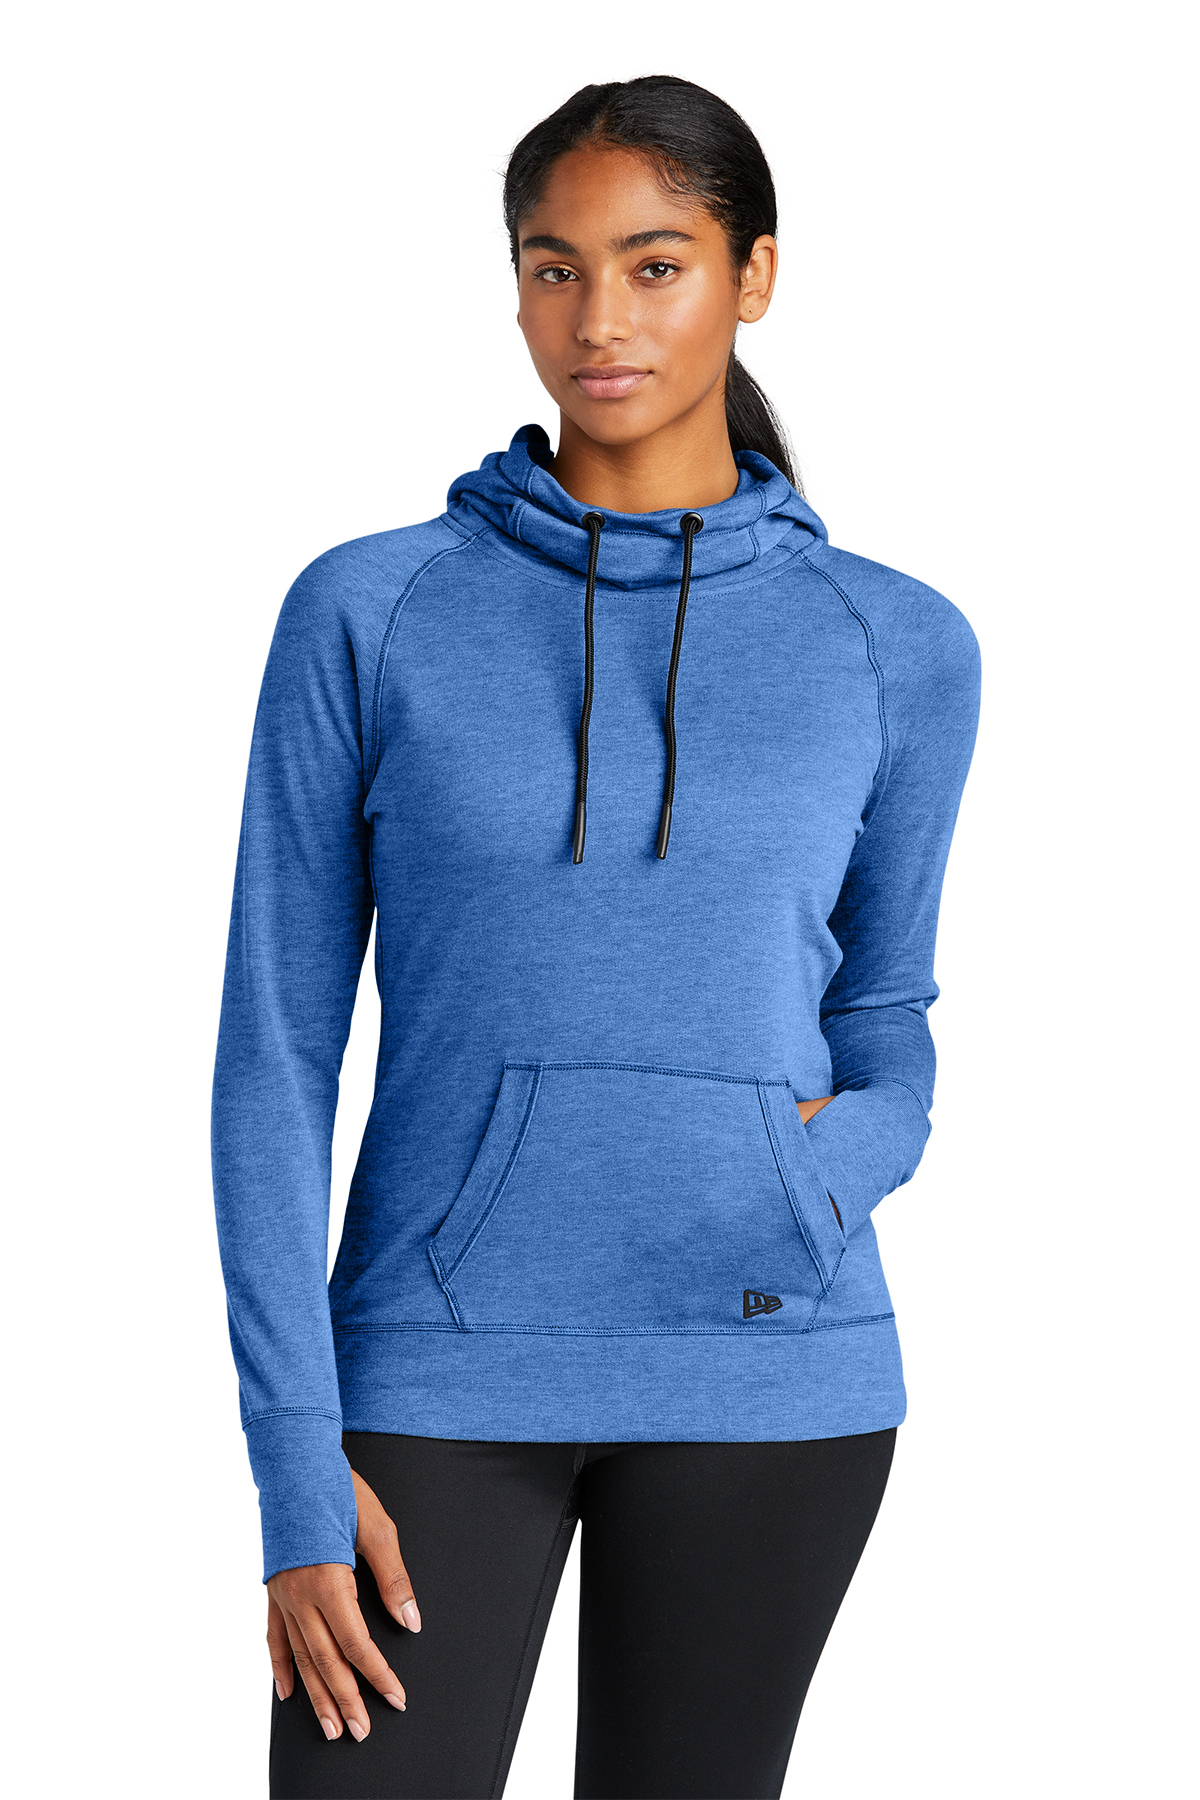 New Era ® Ladies Tri-Blend Fleece Pullover Hoodie | Product | Company ...